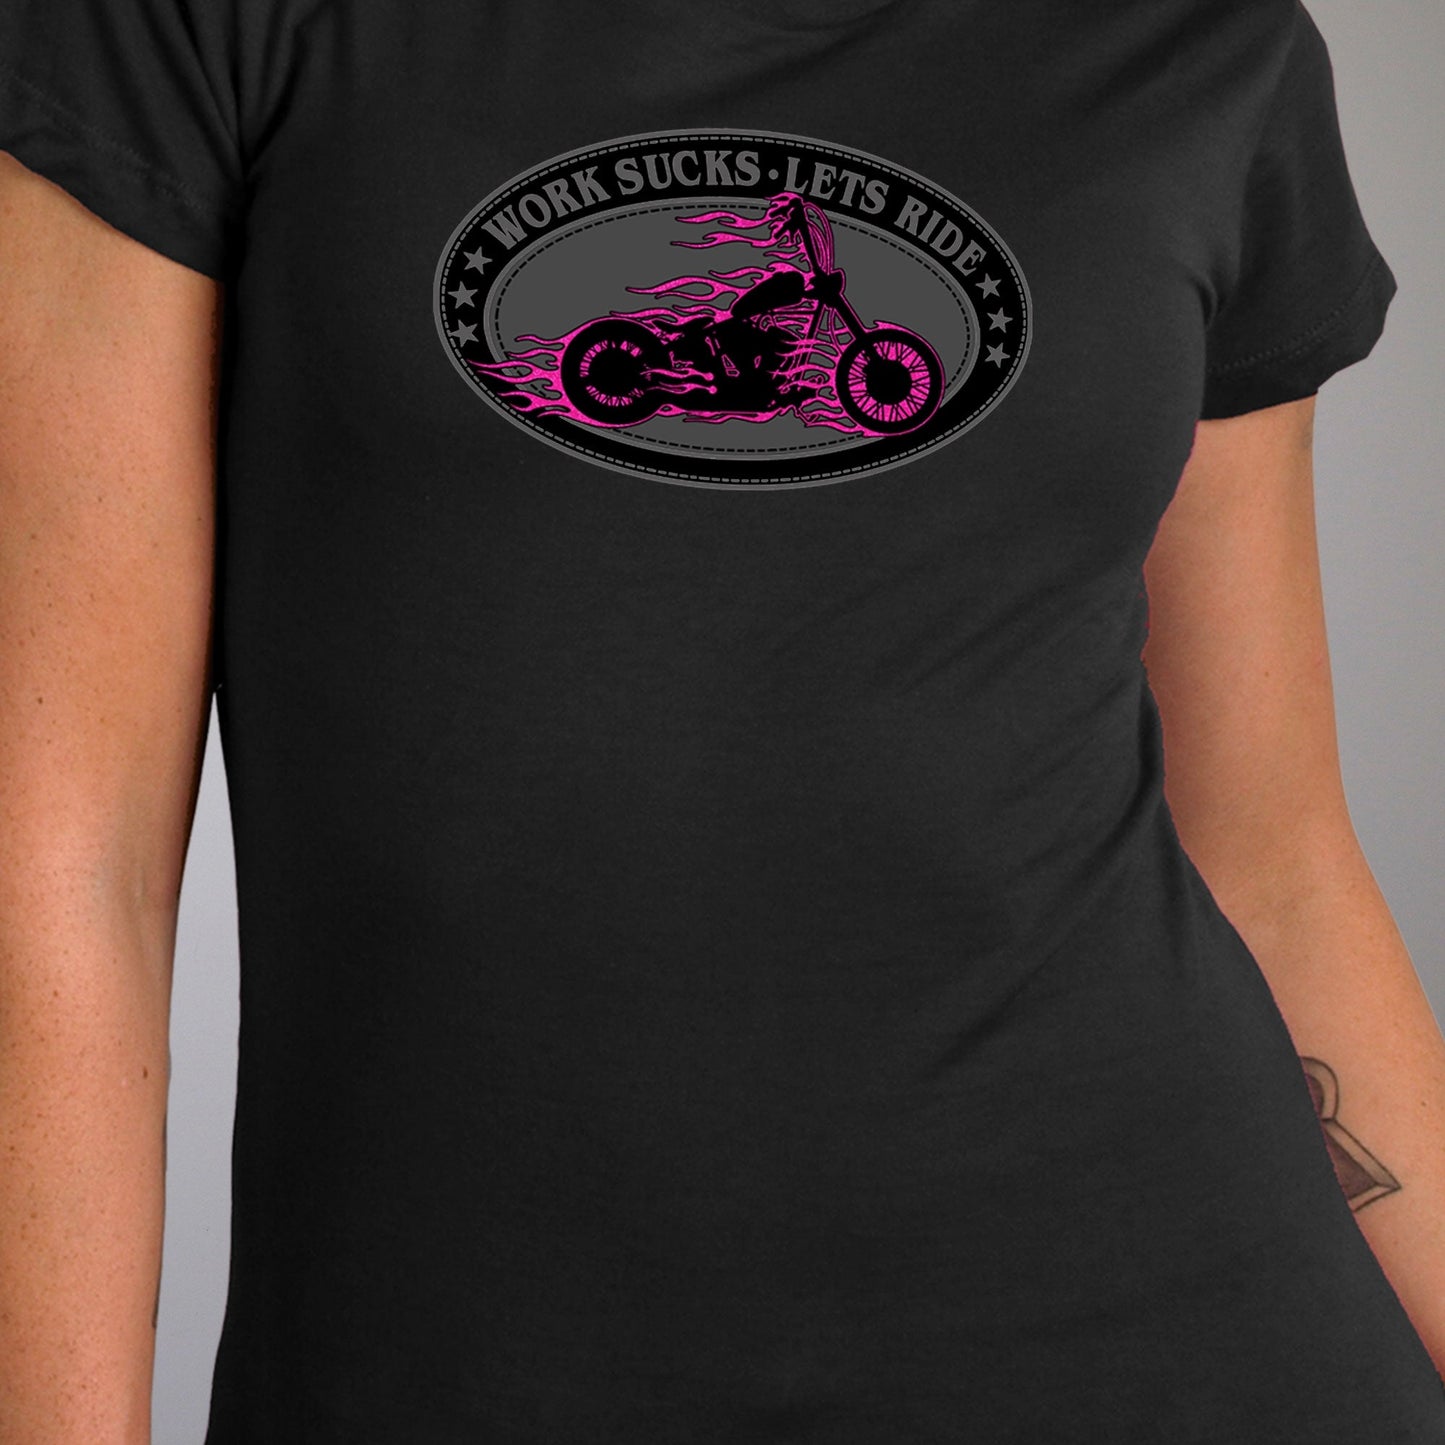 'Work Sucks-Lets Ride Oval' Ladies Black T-Shirt